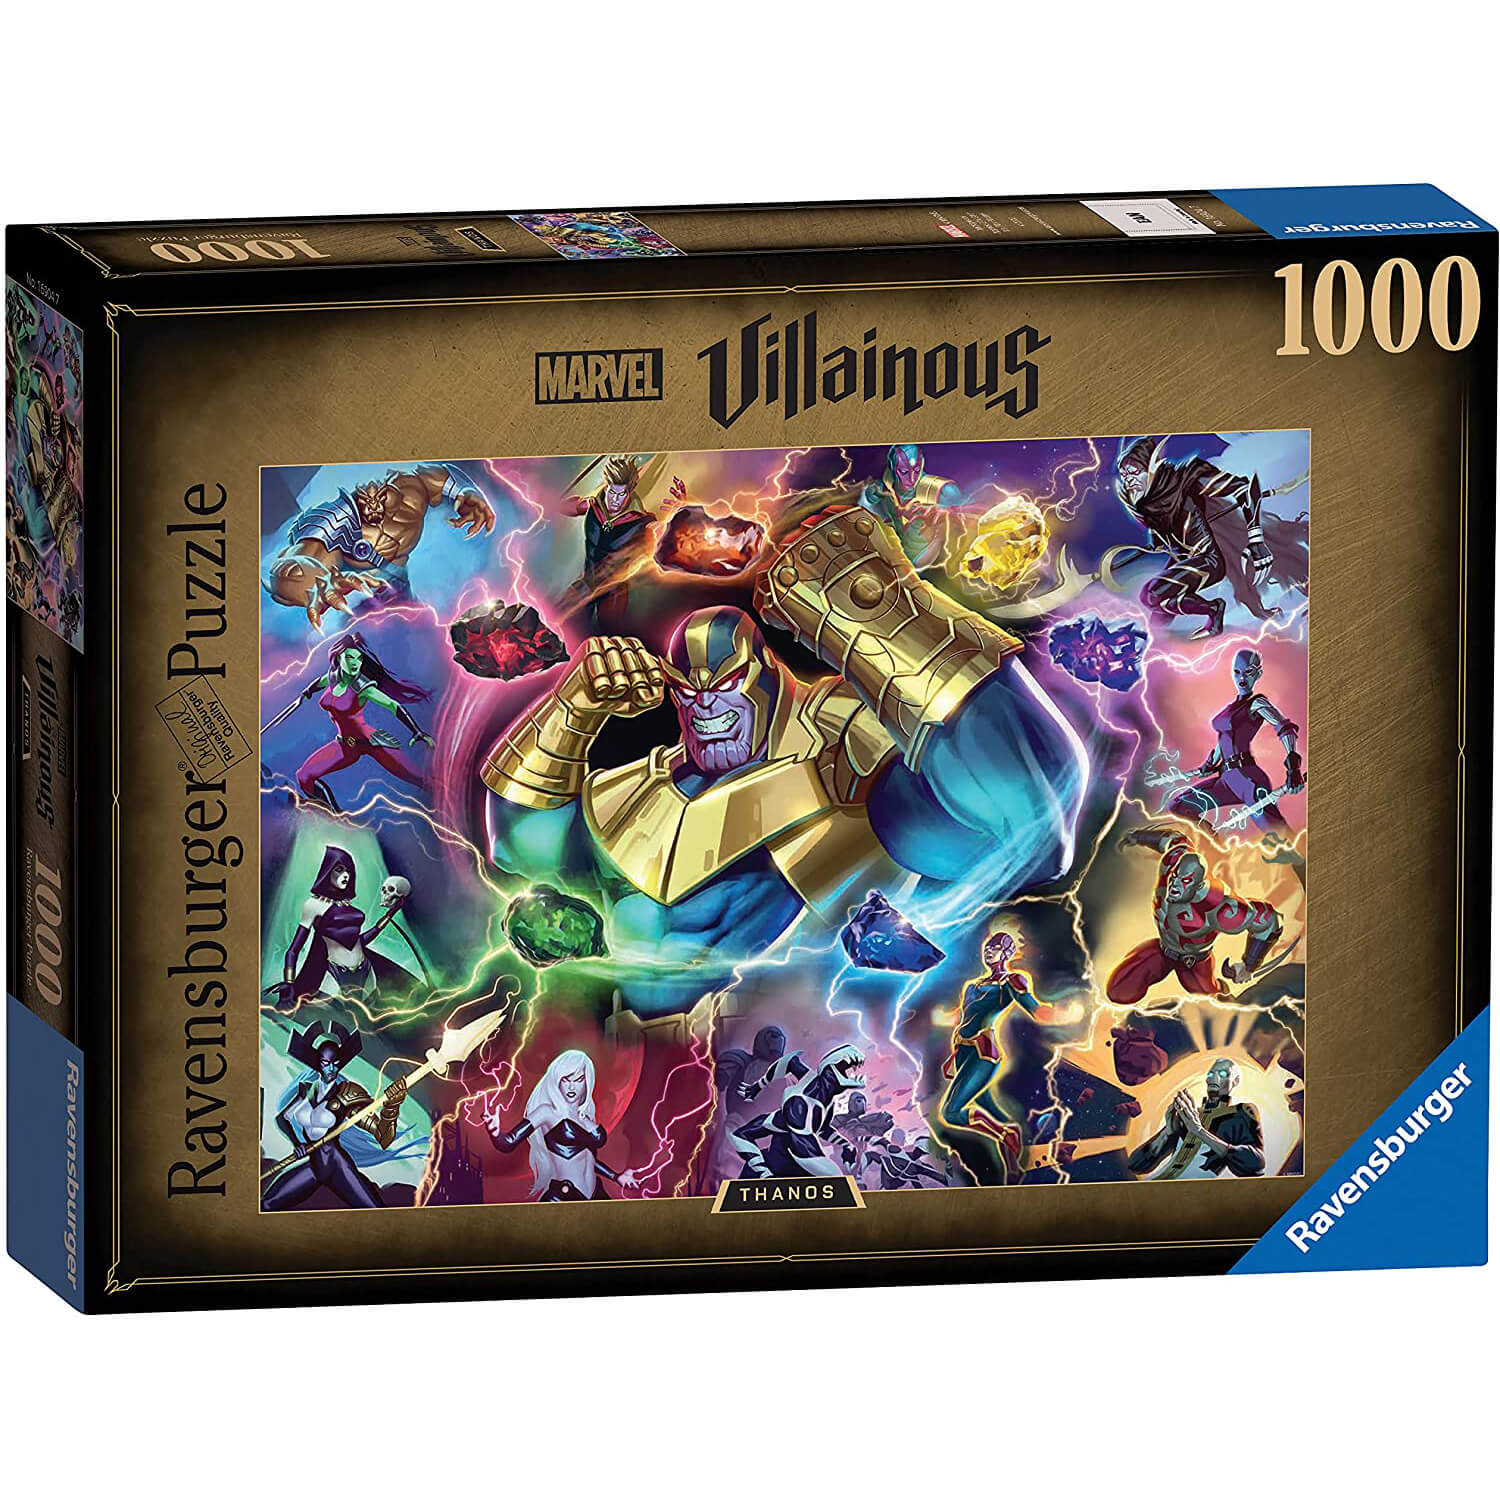 Ravensburger Marvel Villainous: Thanos 1000 Piece Puzzle